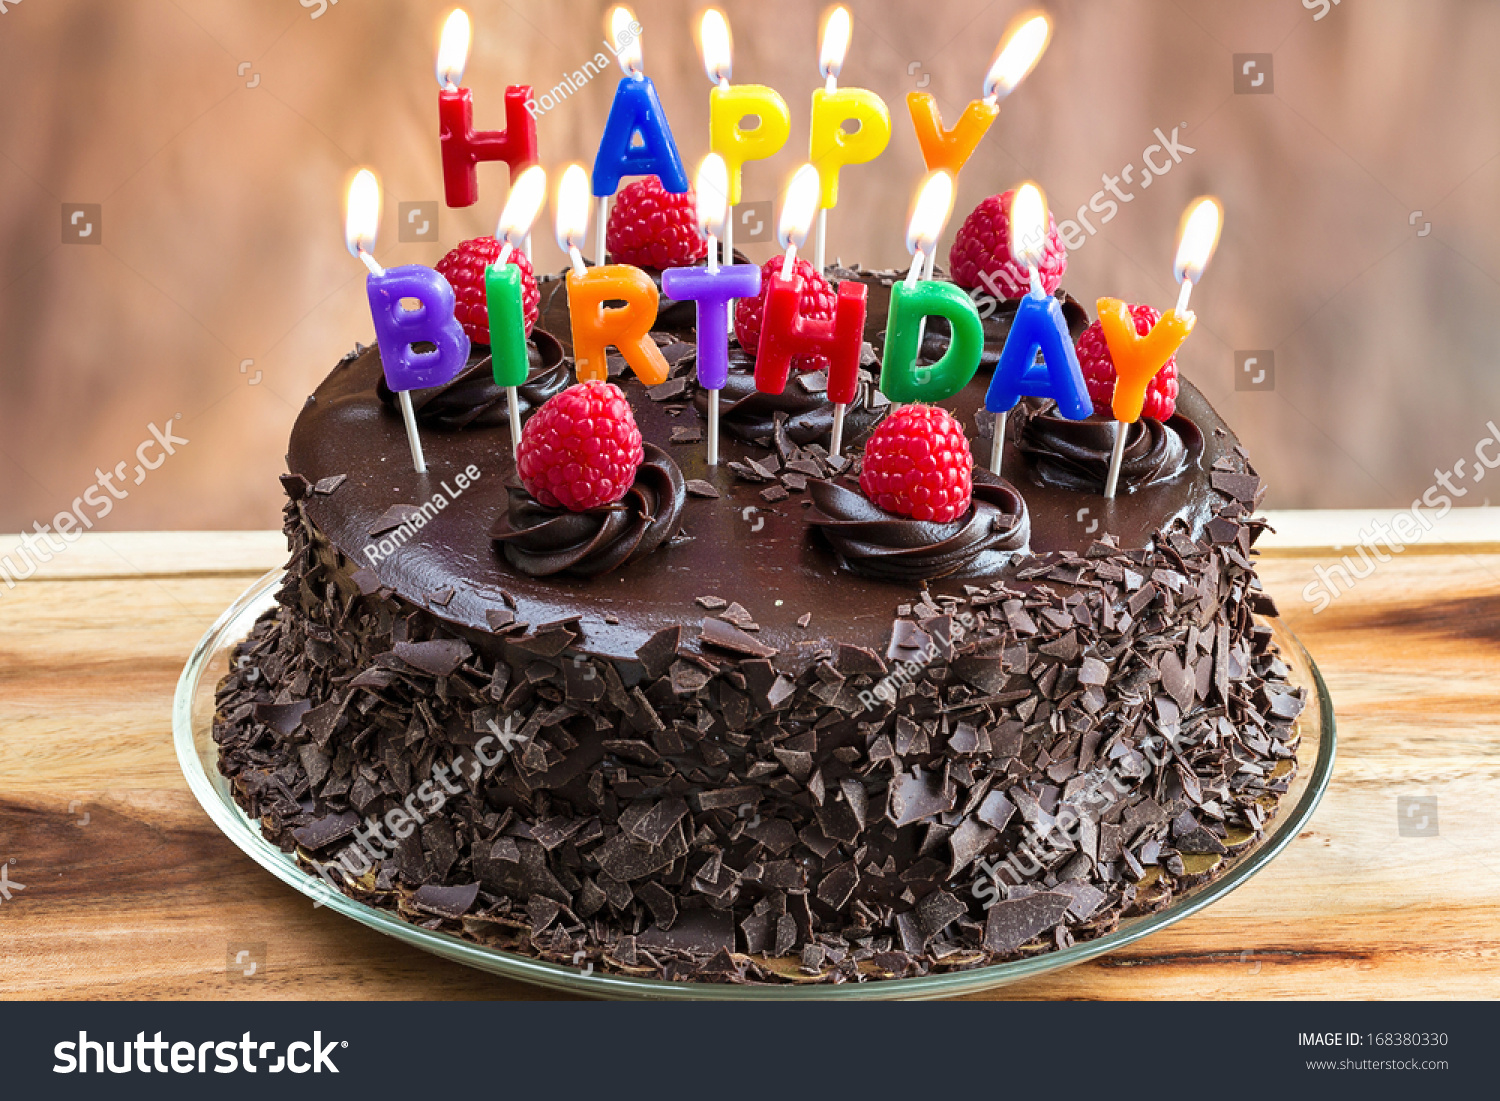 Happy Birthday Candles On Chocolate Cake Imagen de archivo ...